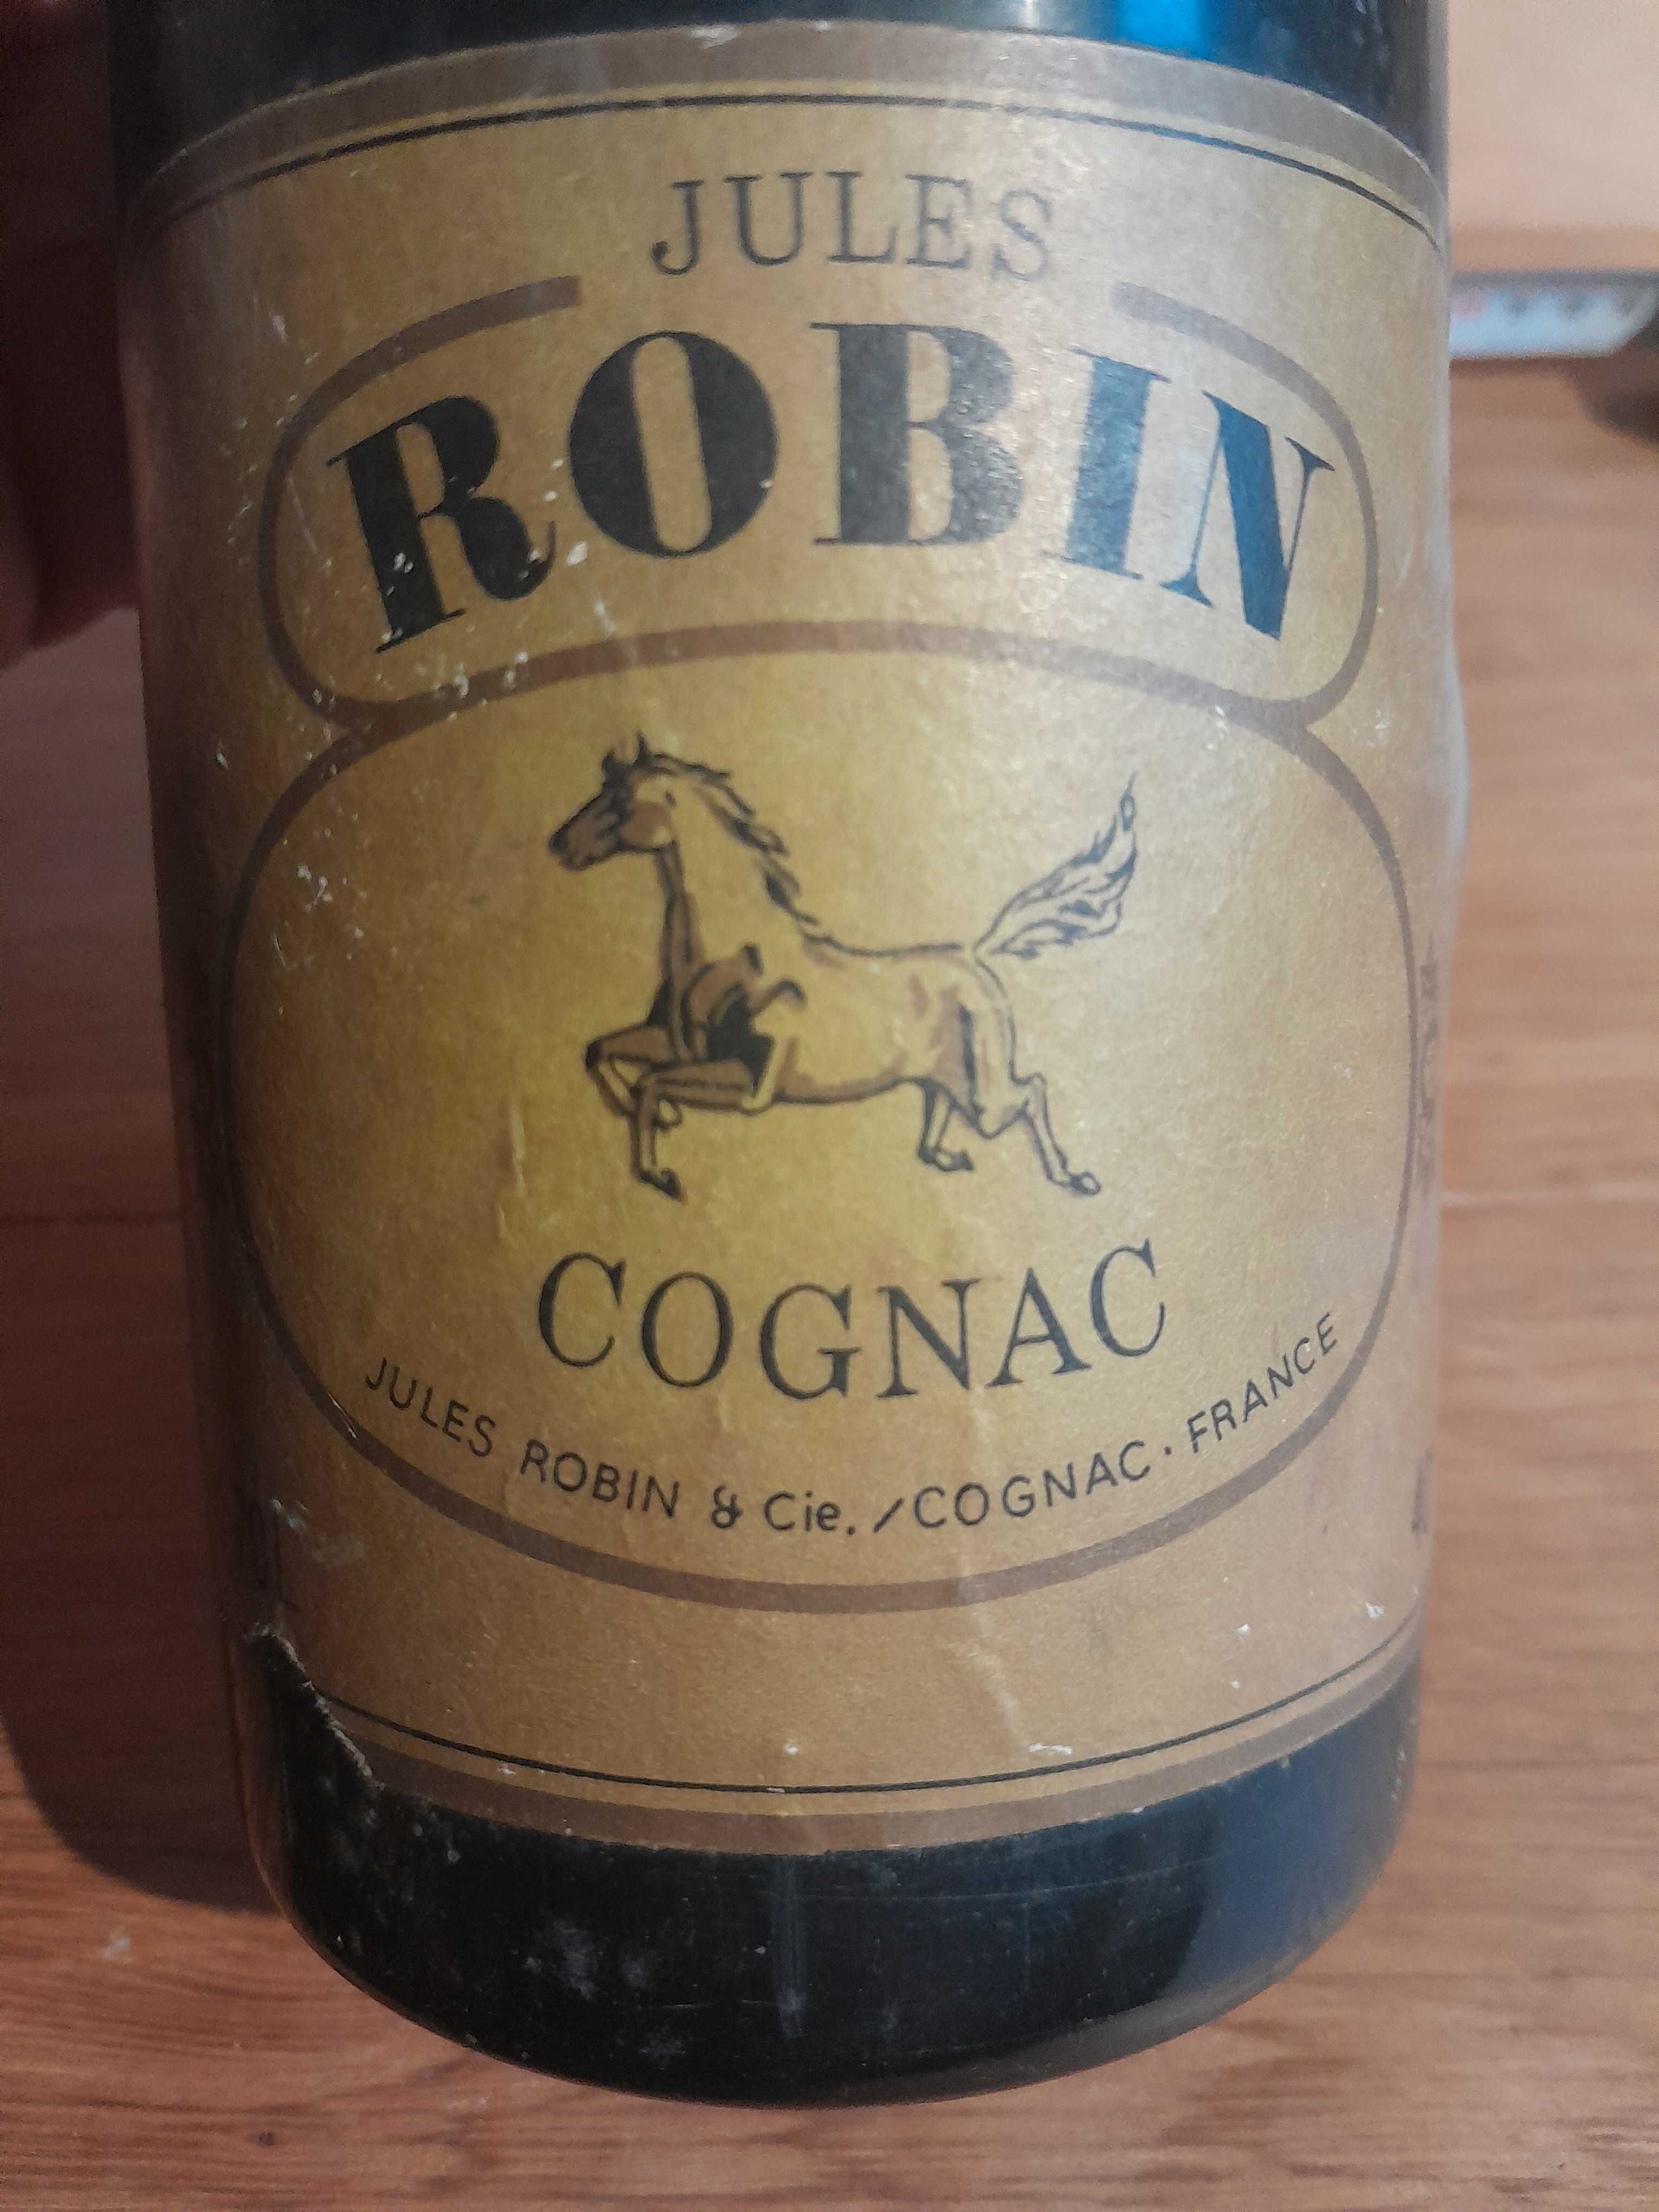 Stara papierośnica Robin butelka Cognac gadżet zabytek PRL retro